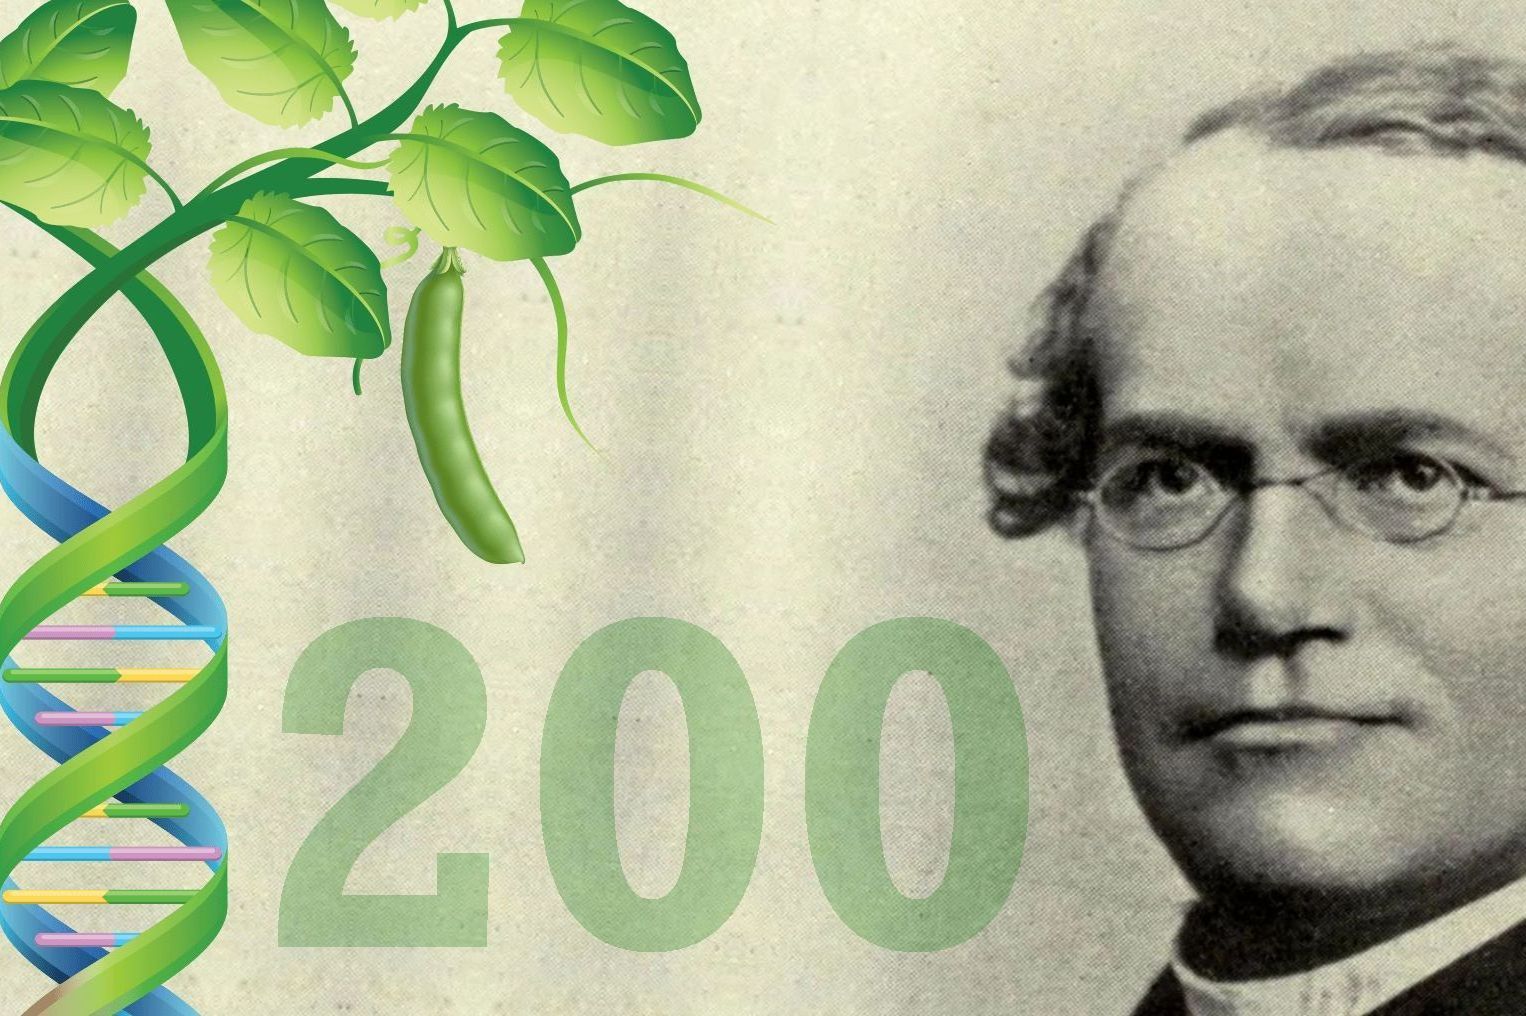 Celebrating the 200th birthday of genetics pioneer Gregor Mendel (1822-1884).